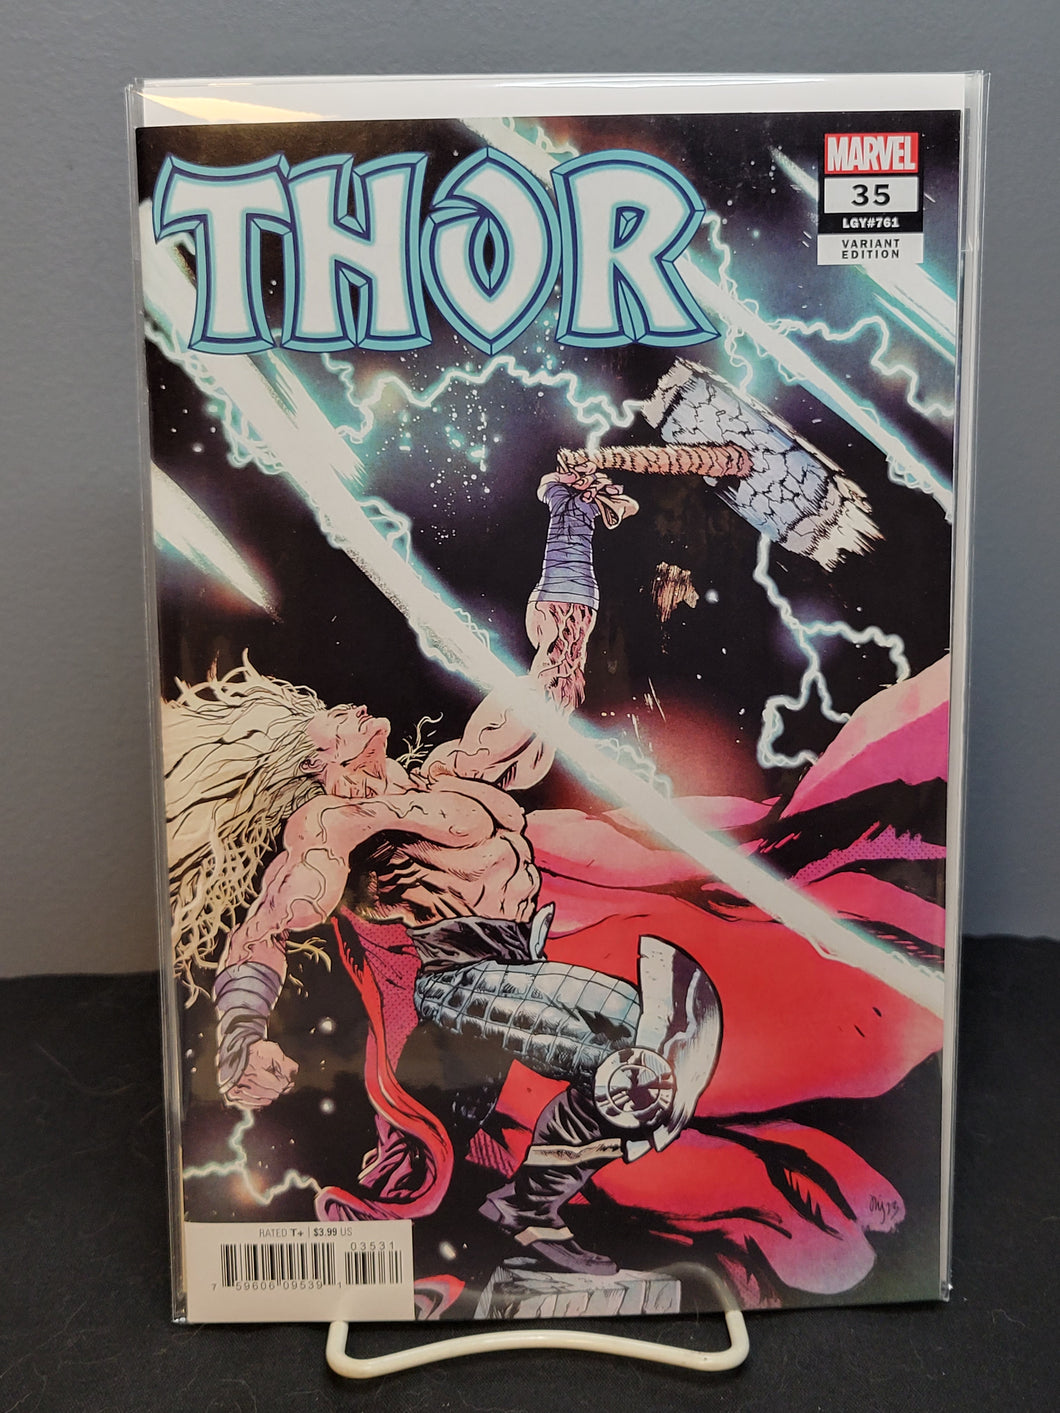 Thor #35 Variant